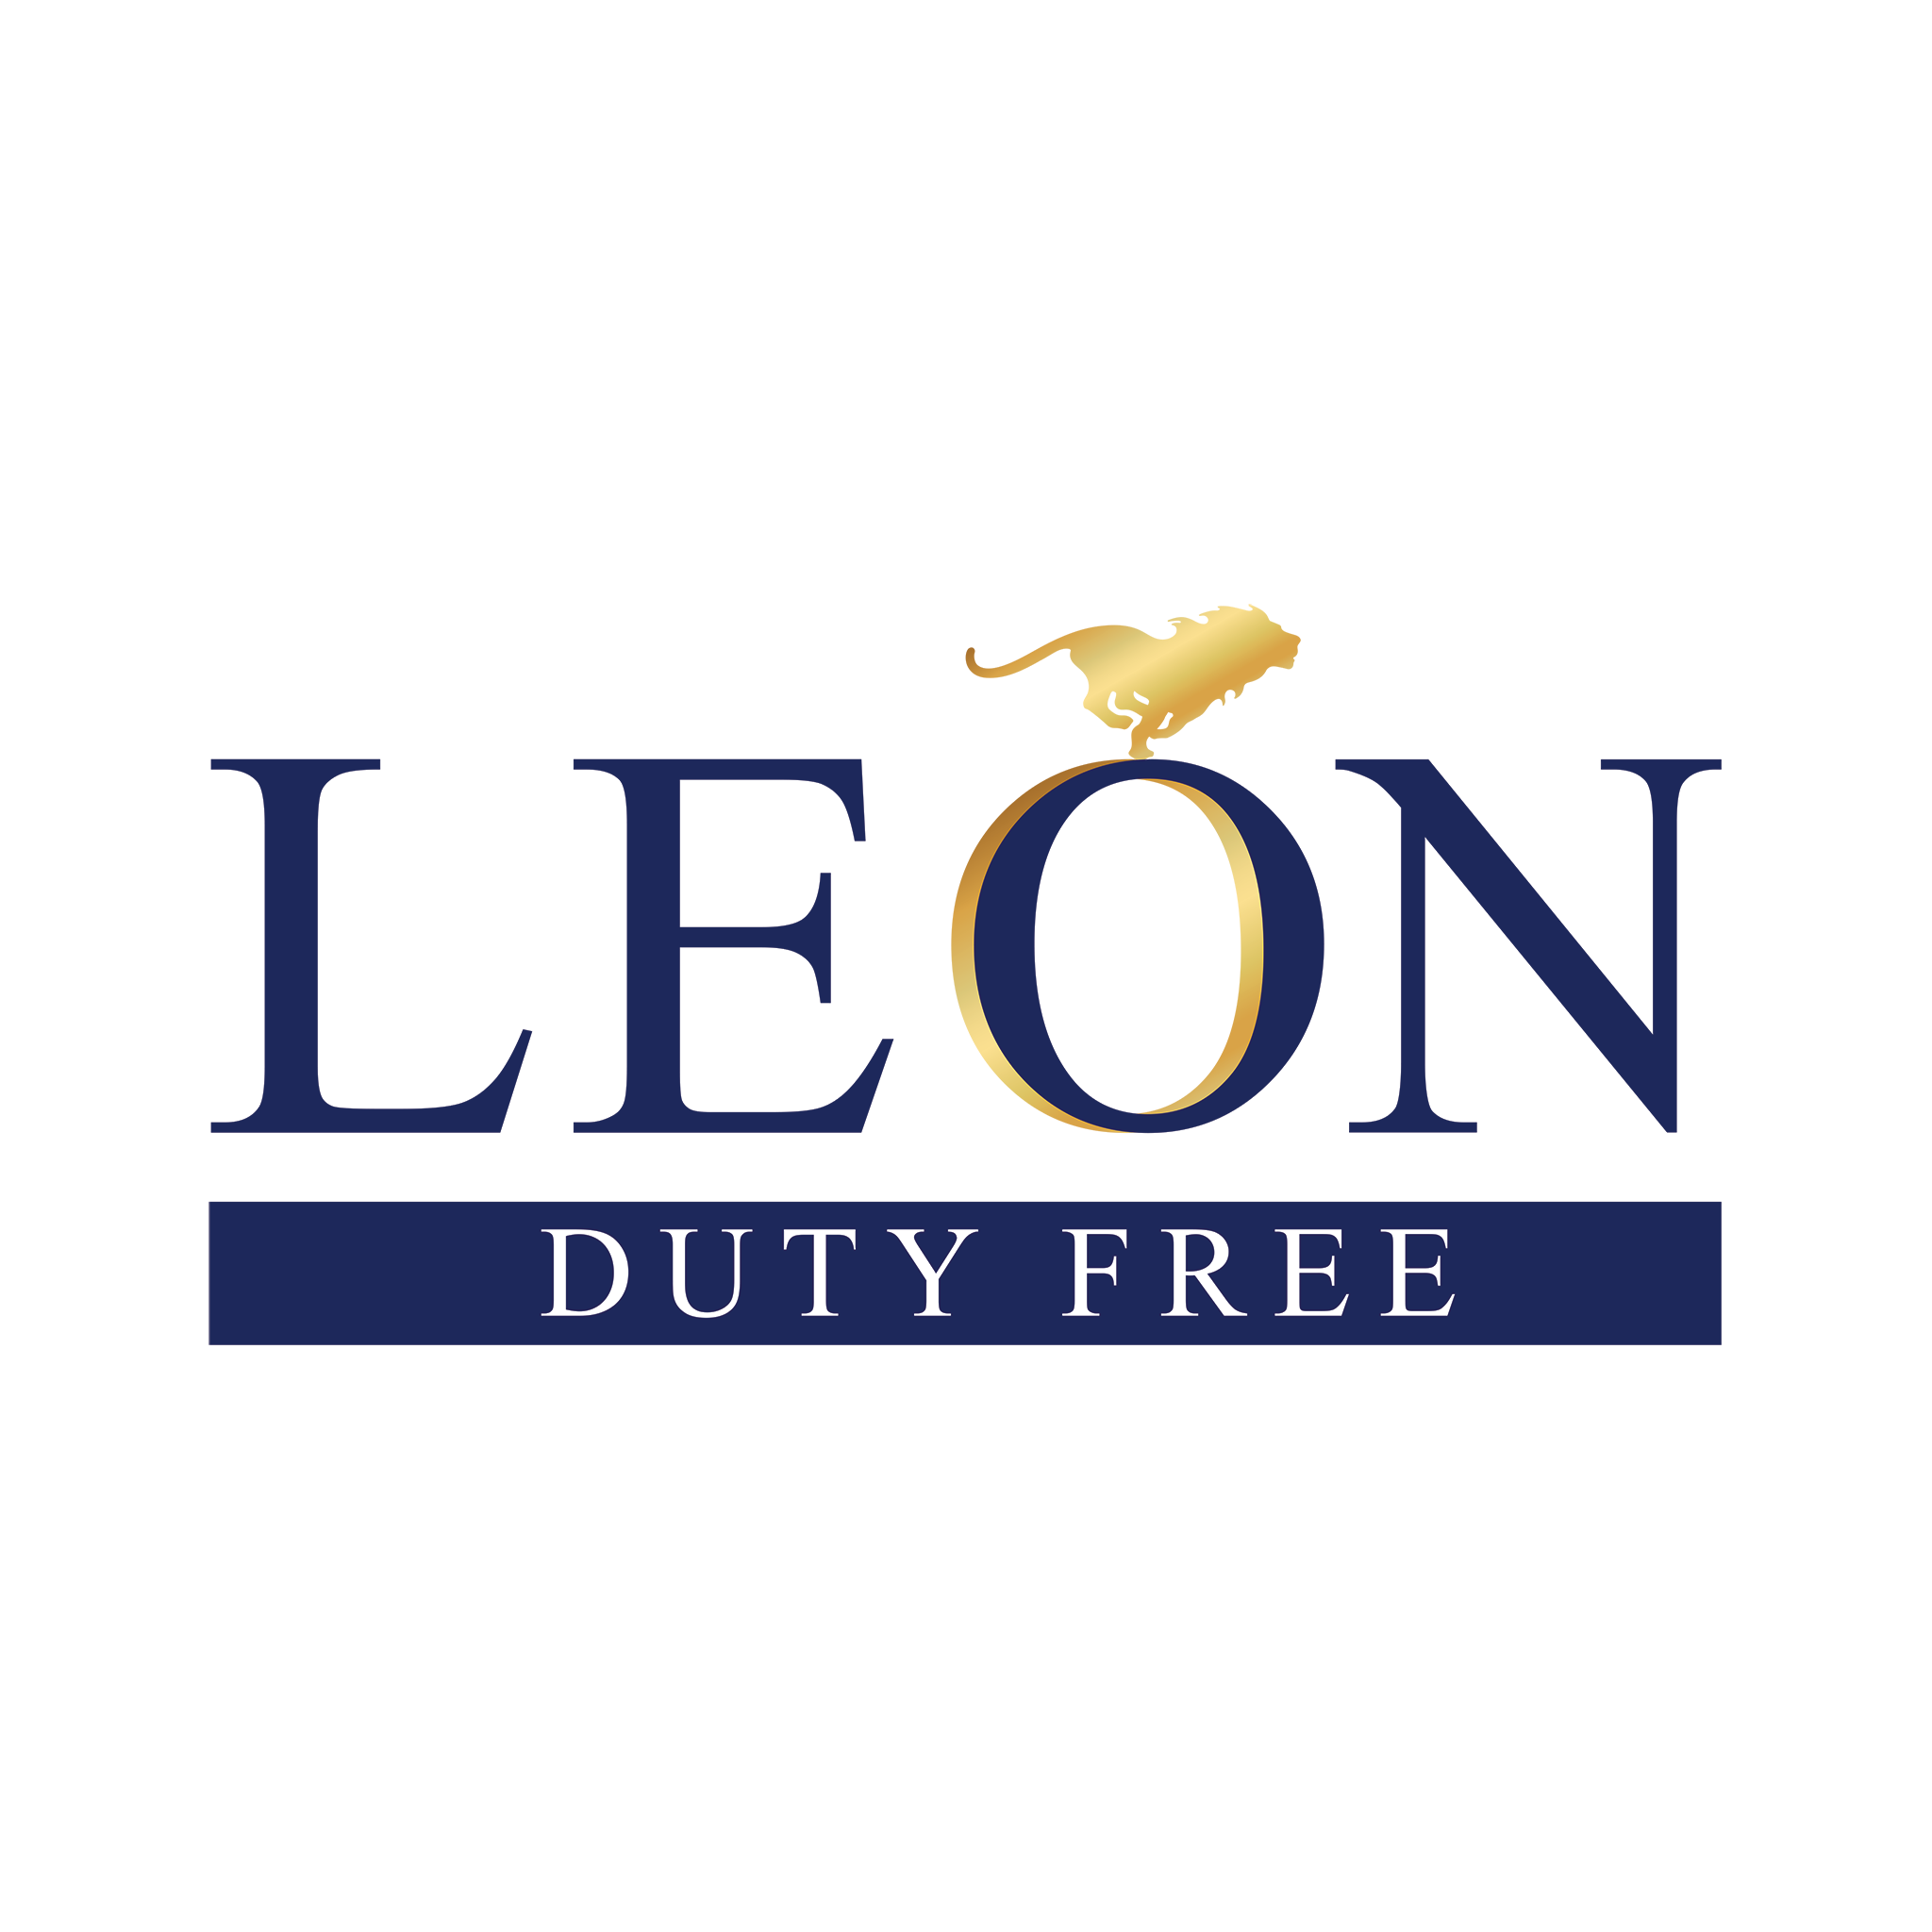 leon duty free